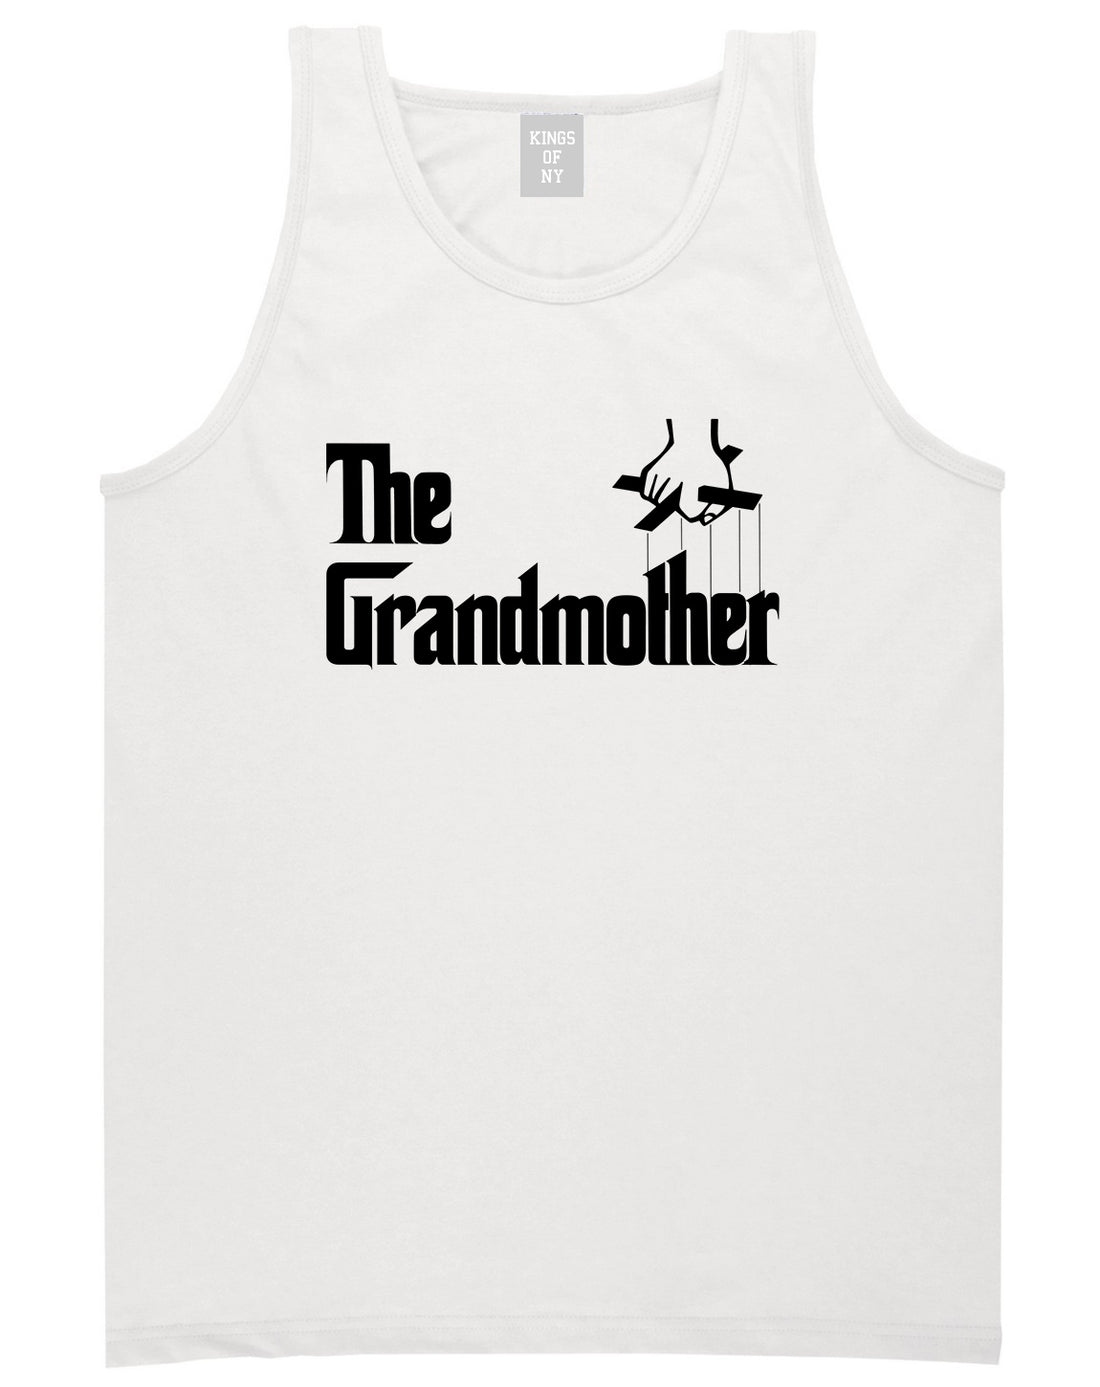 The Grandmother Funny New Grandma Mens Tank Top T-Shirt White